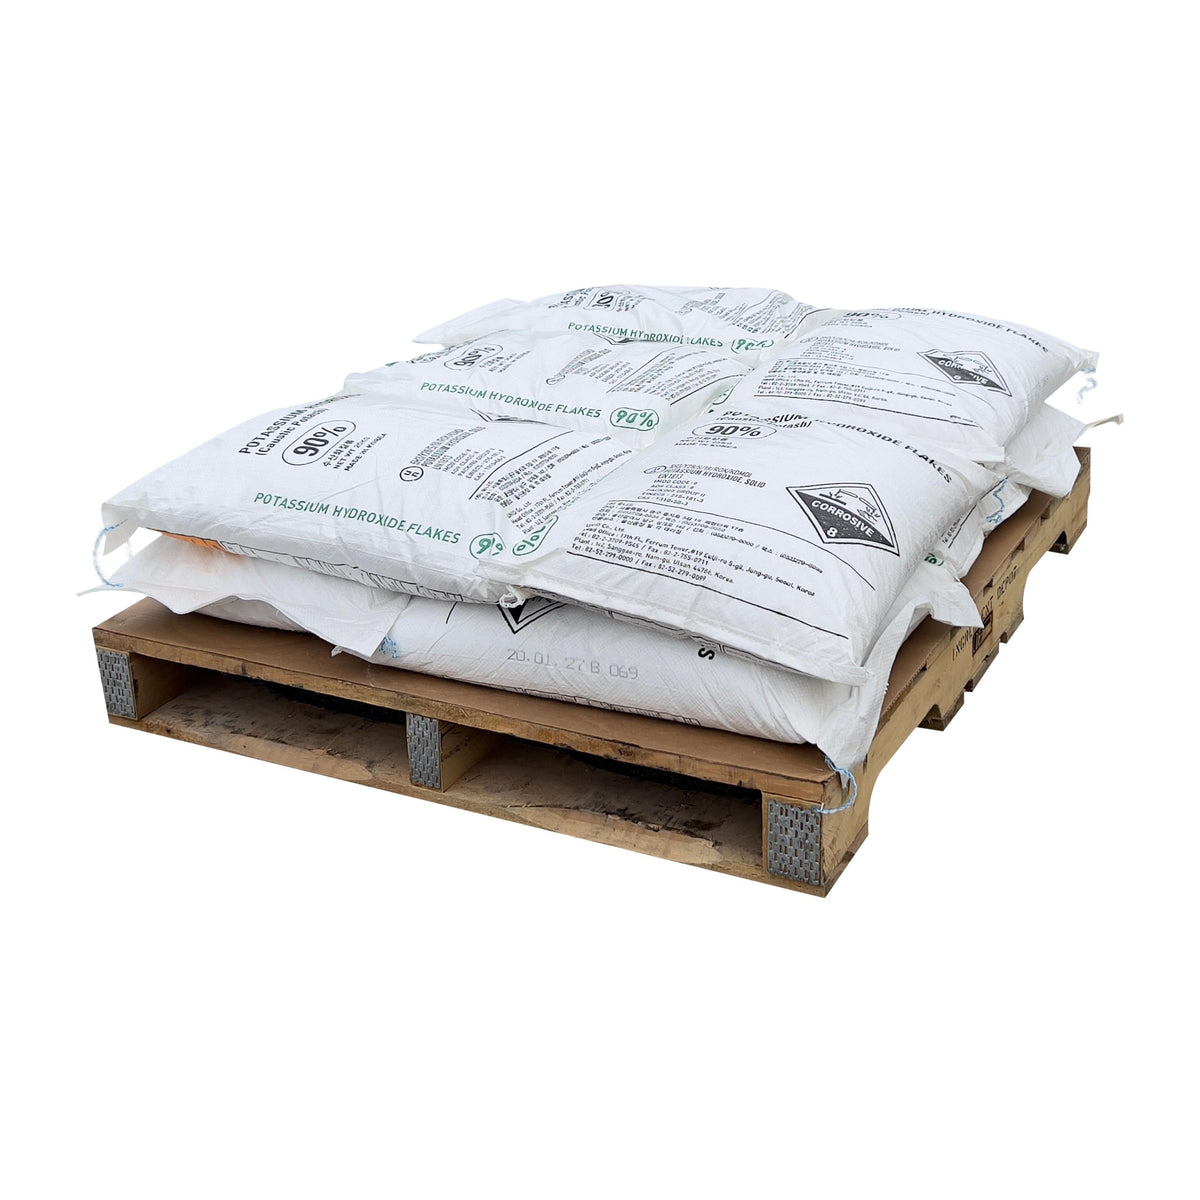 Ingredient Depot Potassium Hydroxide 500 lbs 10 Bags on Pallet